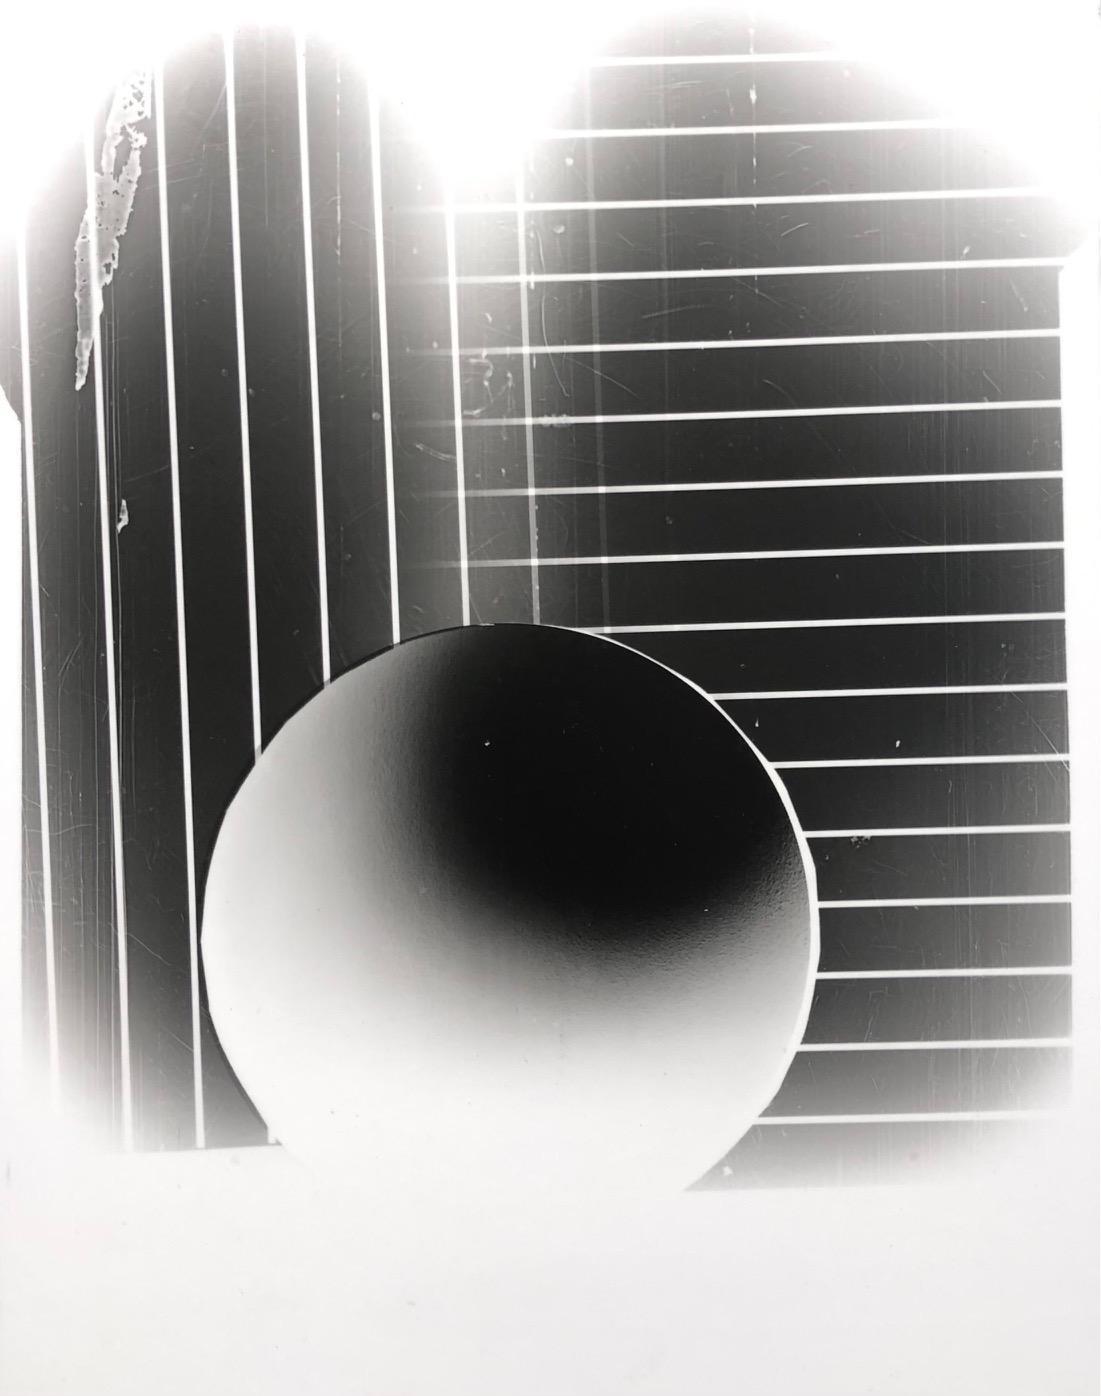 Juan Fernandez, Sphere 1 (Negative), 2022, Laminated silver gelatin print mounted on masonite 14” x 11” x 1”